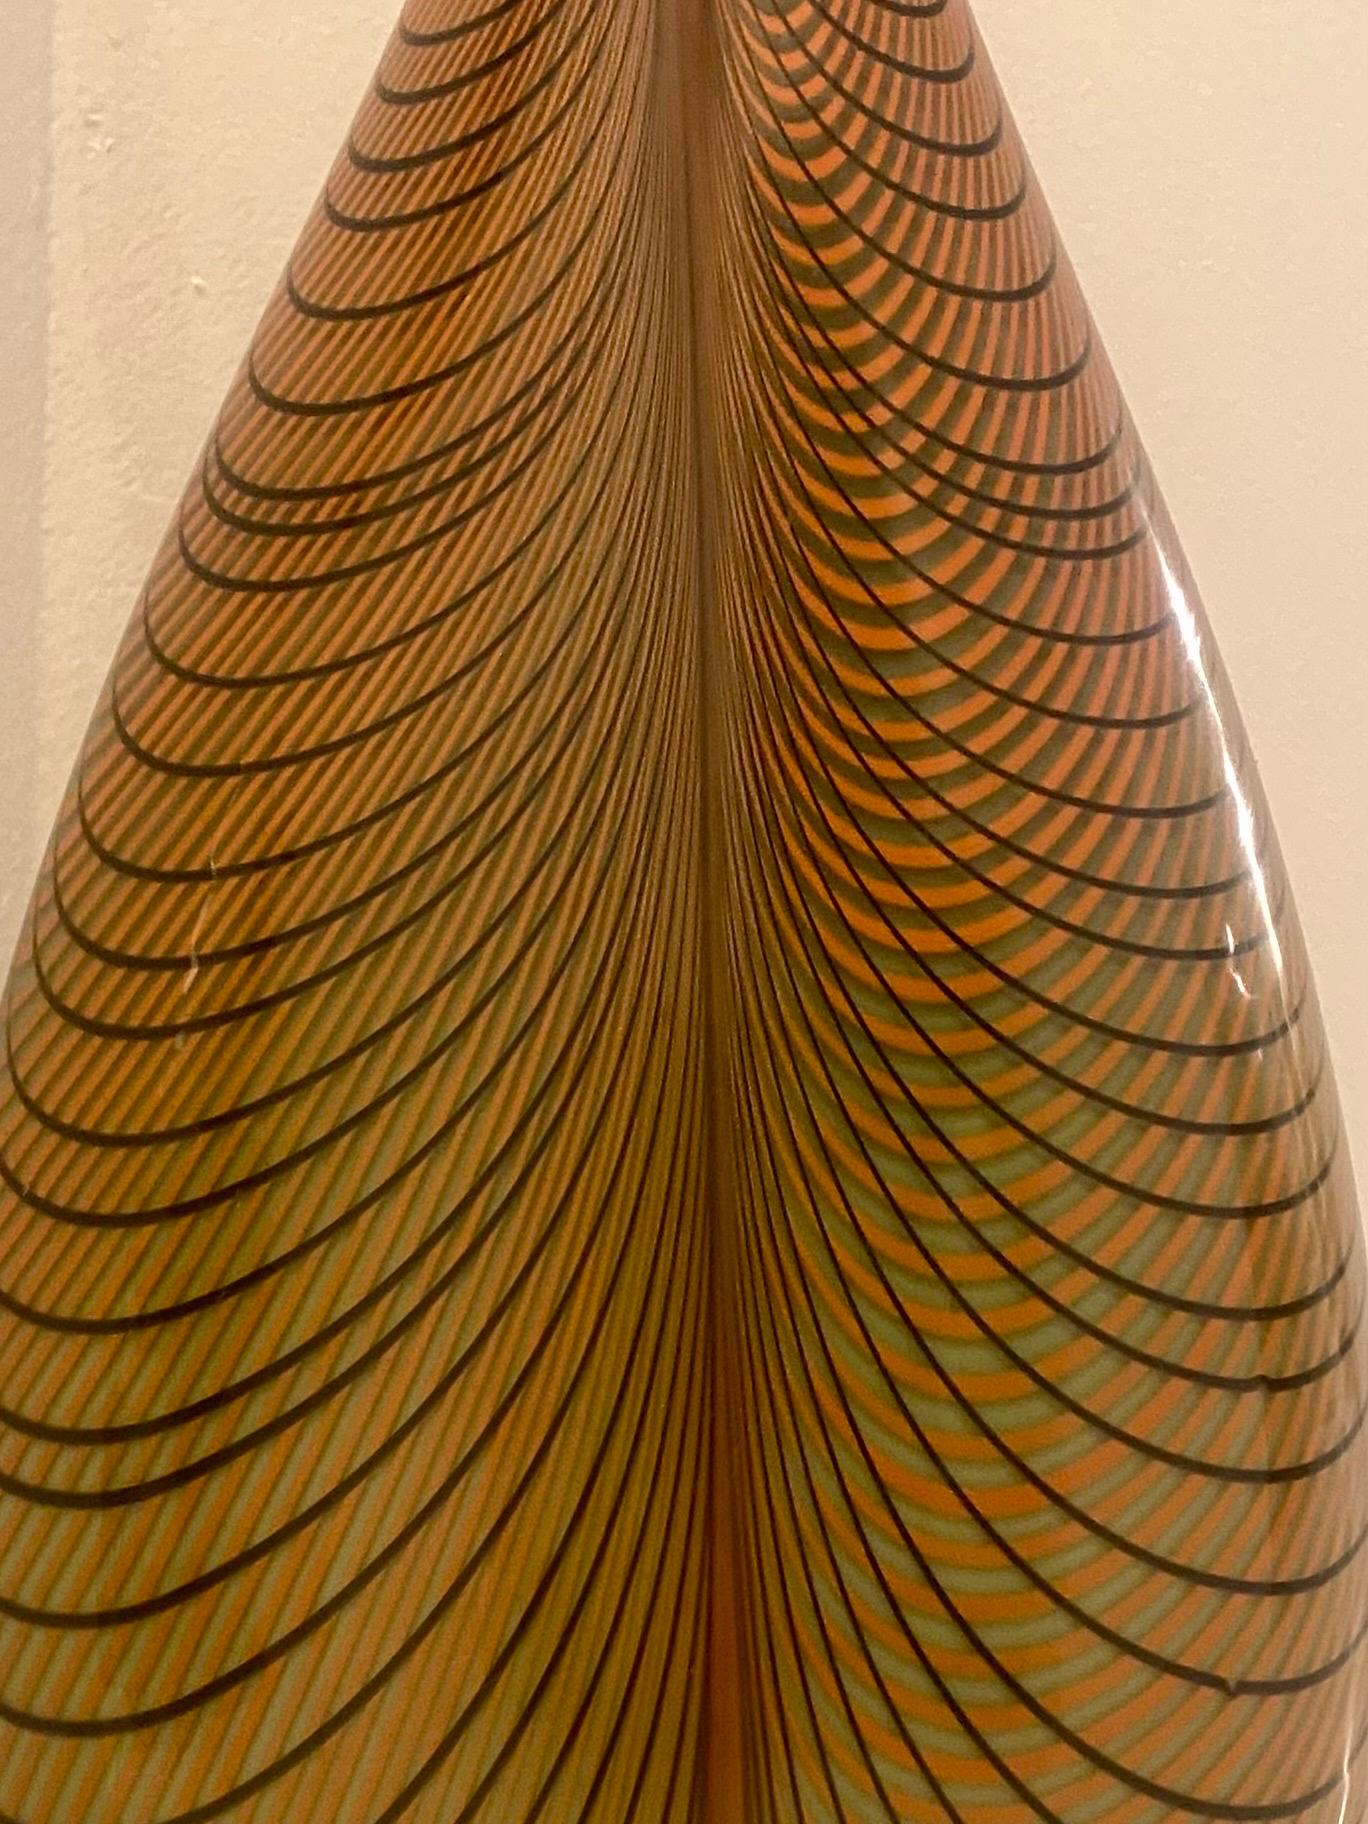 Alberto Dona Tall Feather Murano Glass Vase, Signed 5